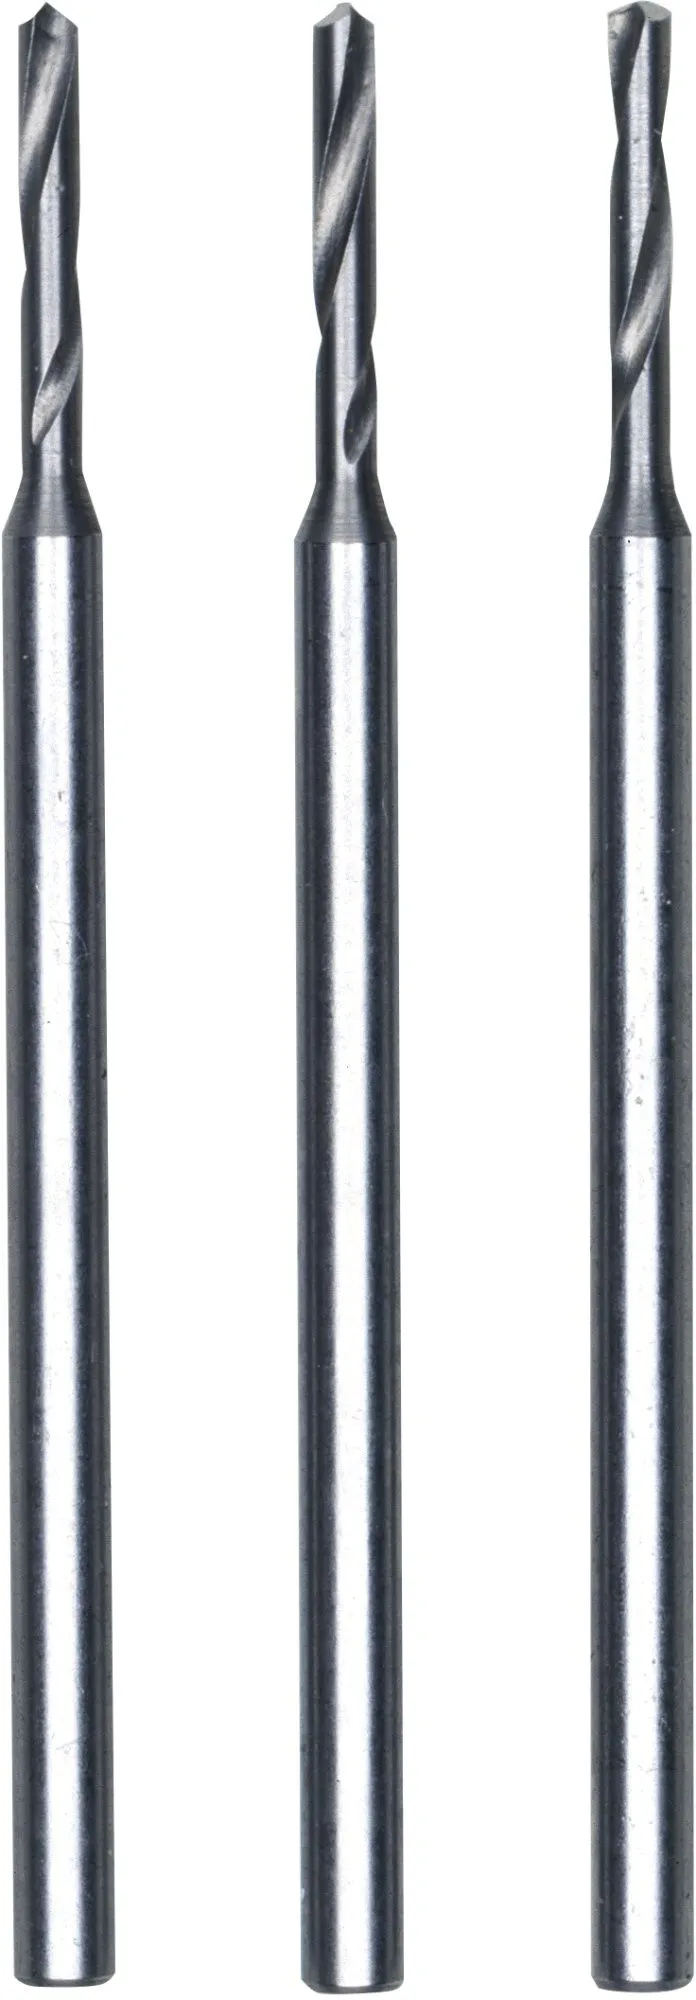 Вольфрам-ванадиевые свёрла 3шт 1.2мм PROXXON (28856)